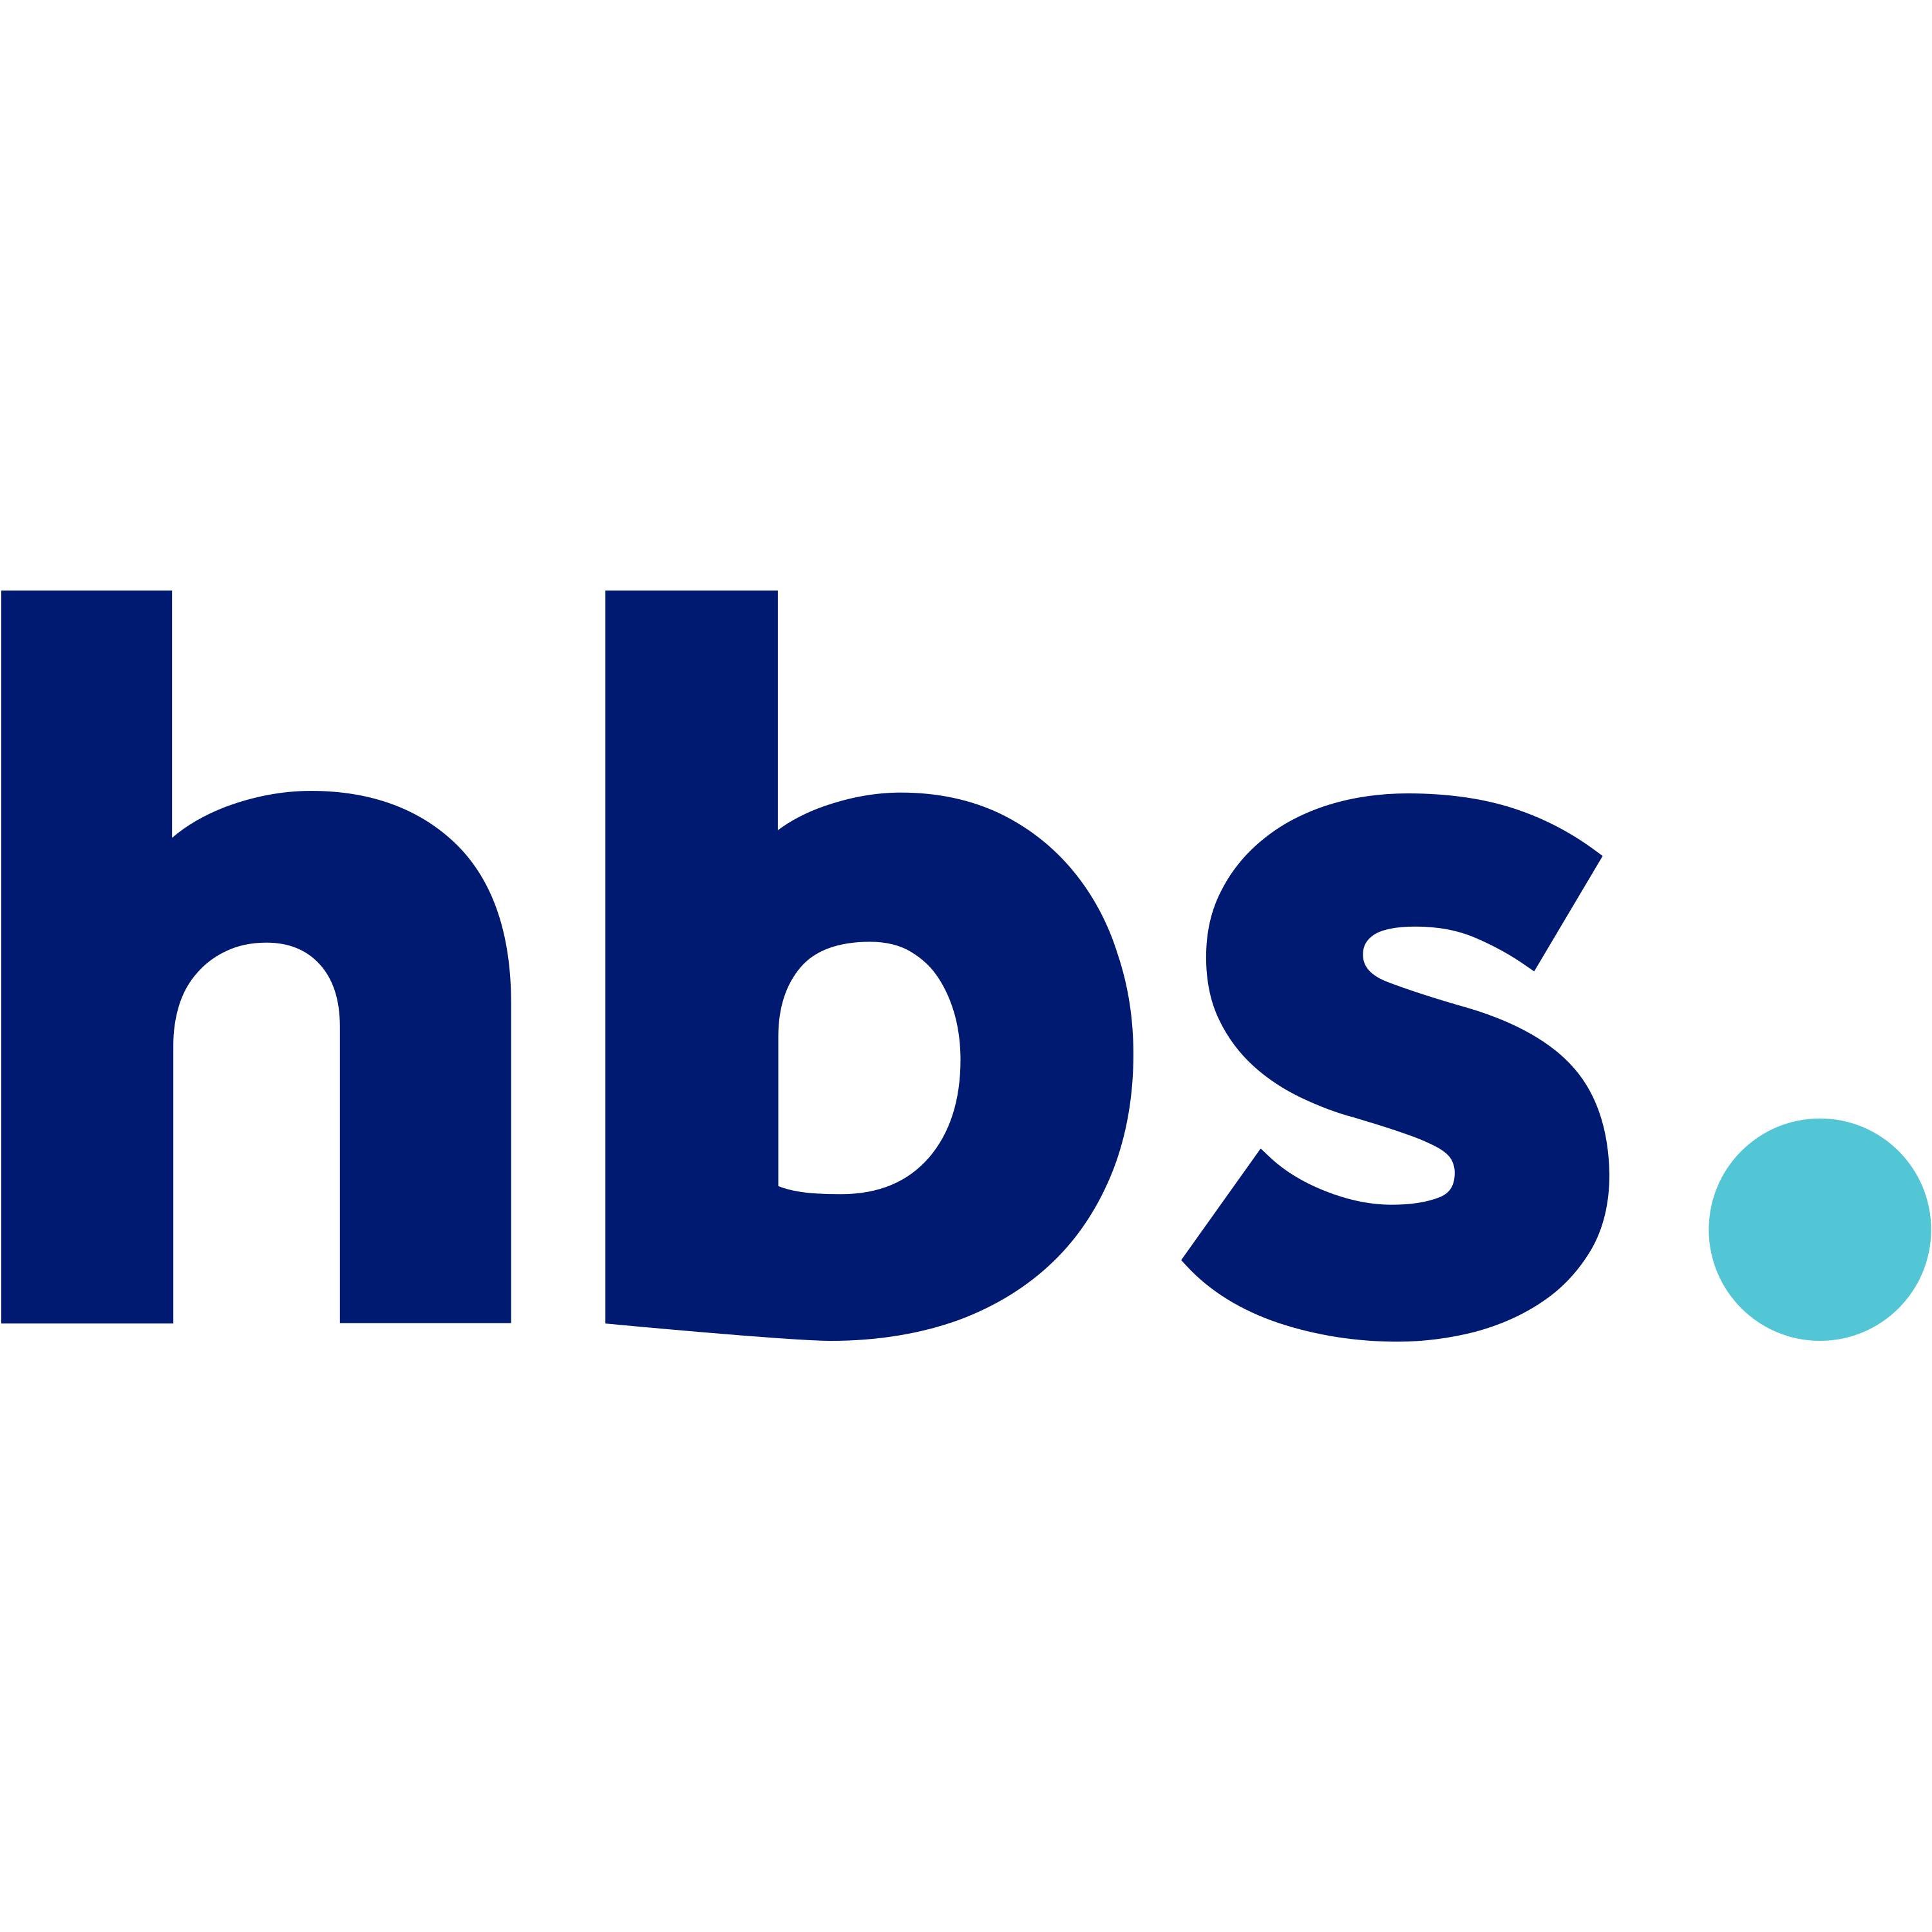 Host Broadcast Services Logo  Transparent Image